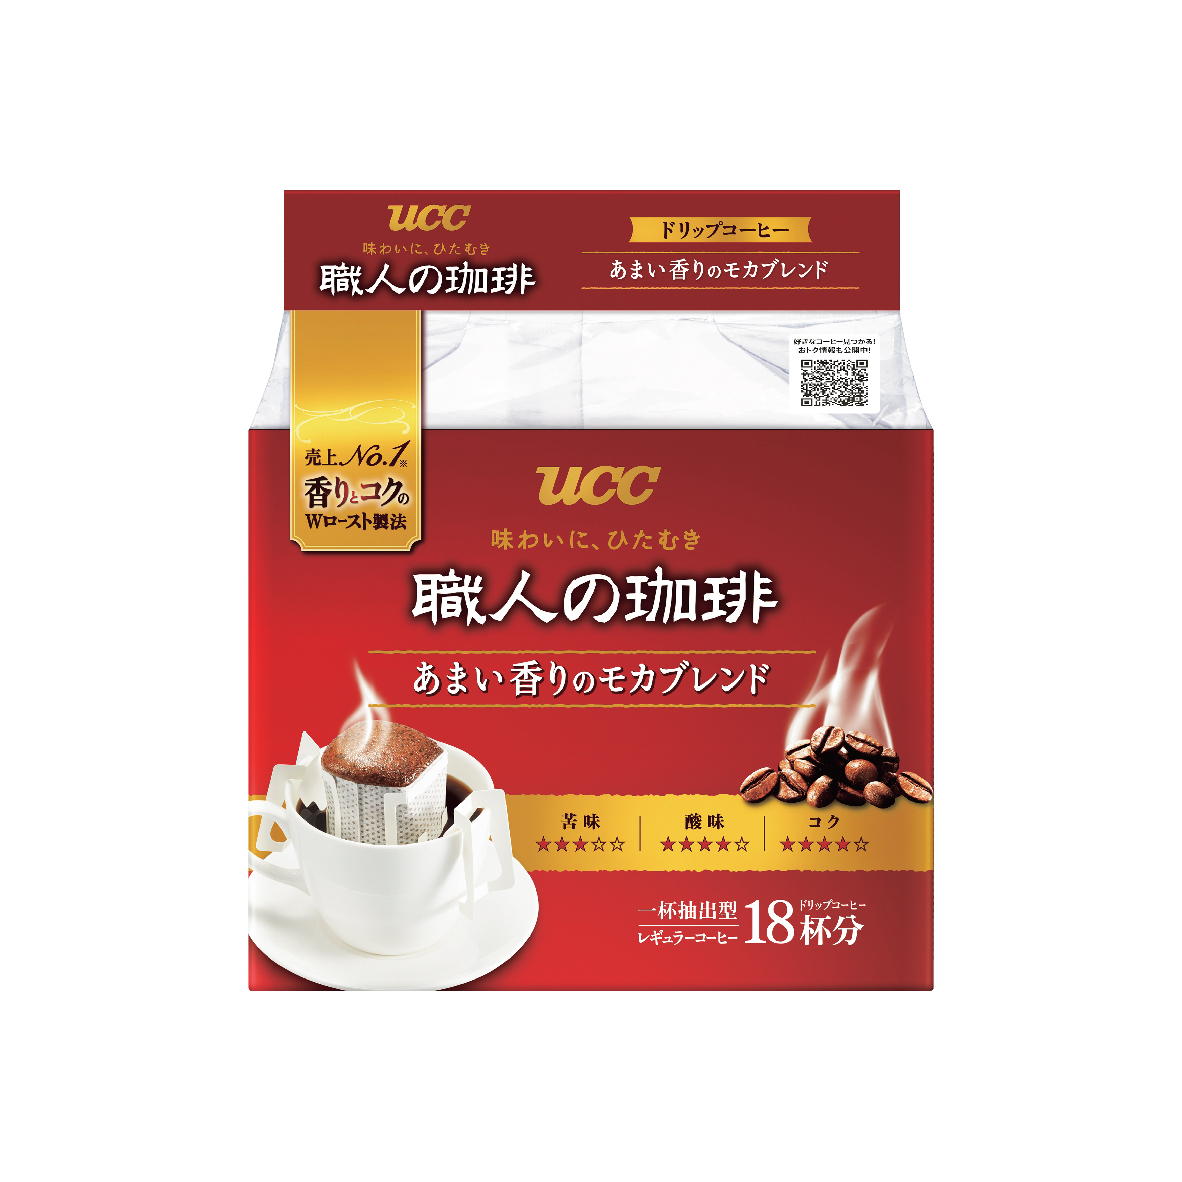 UCC Craftsman’s Coffee Mocha Drip Coffee